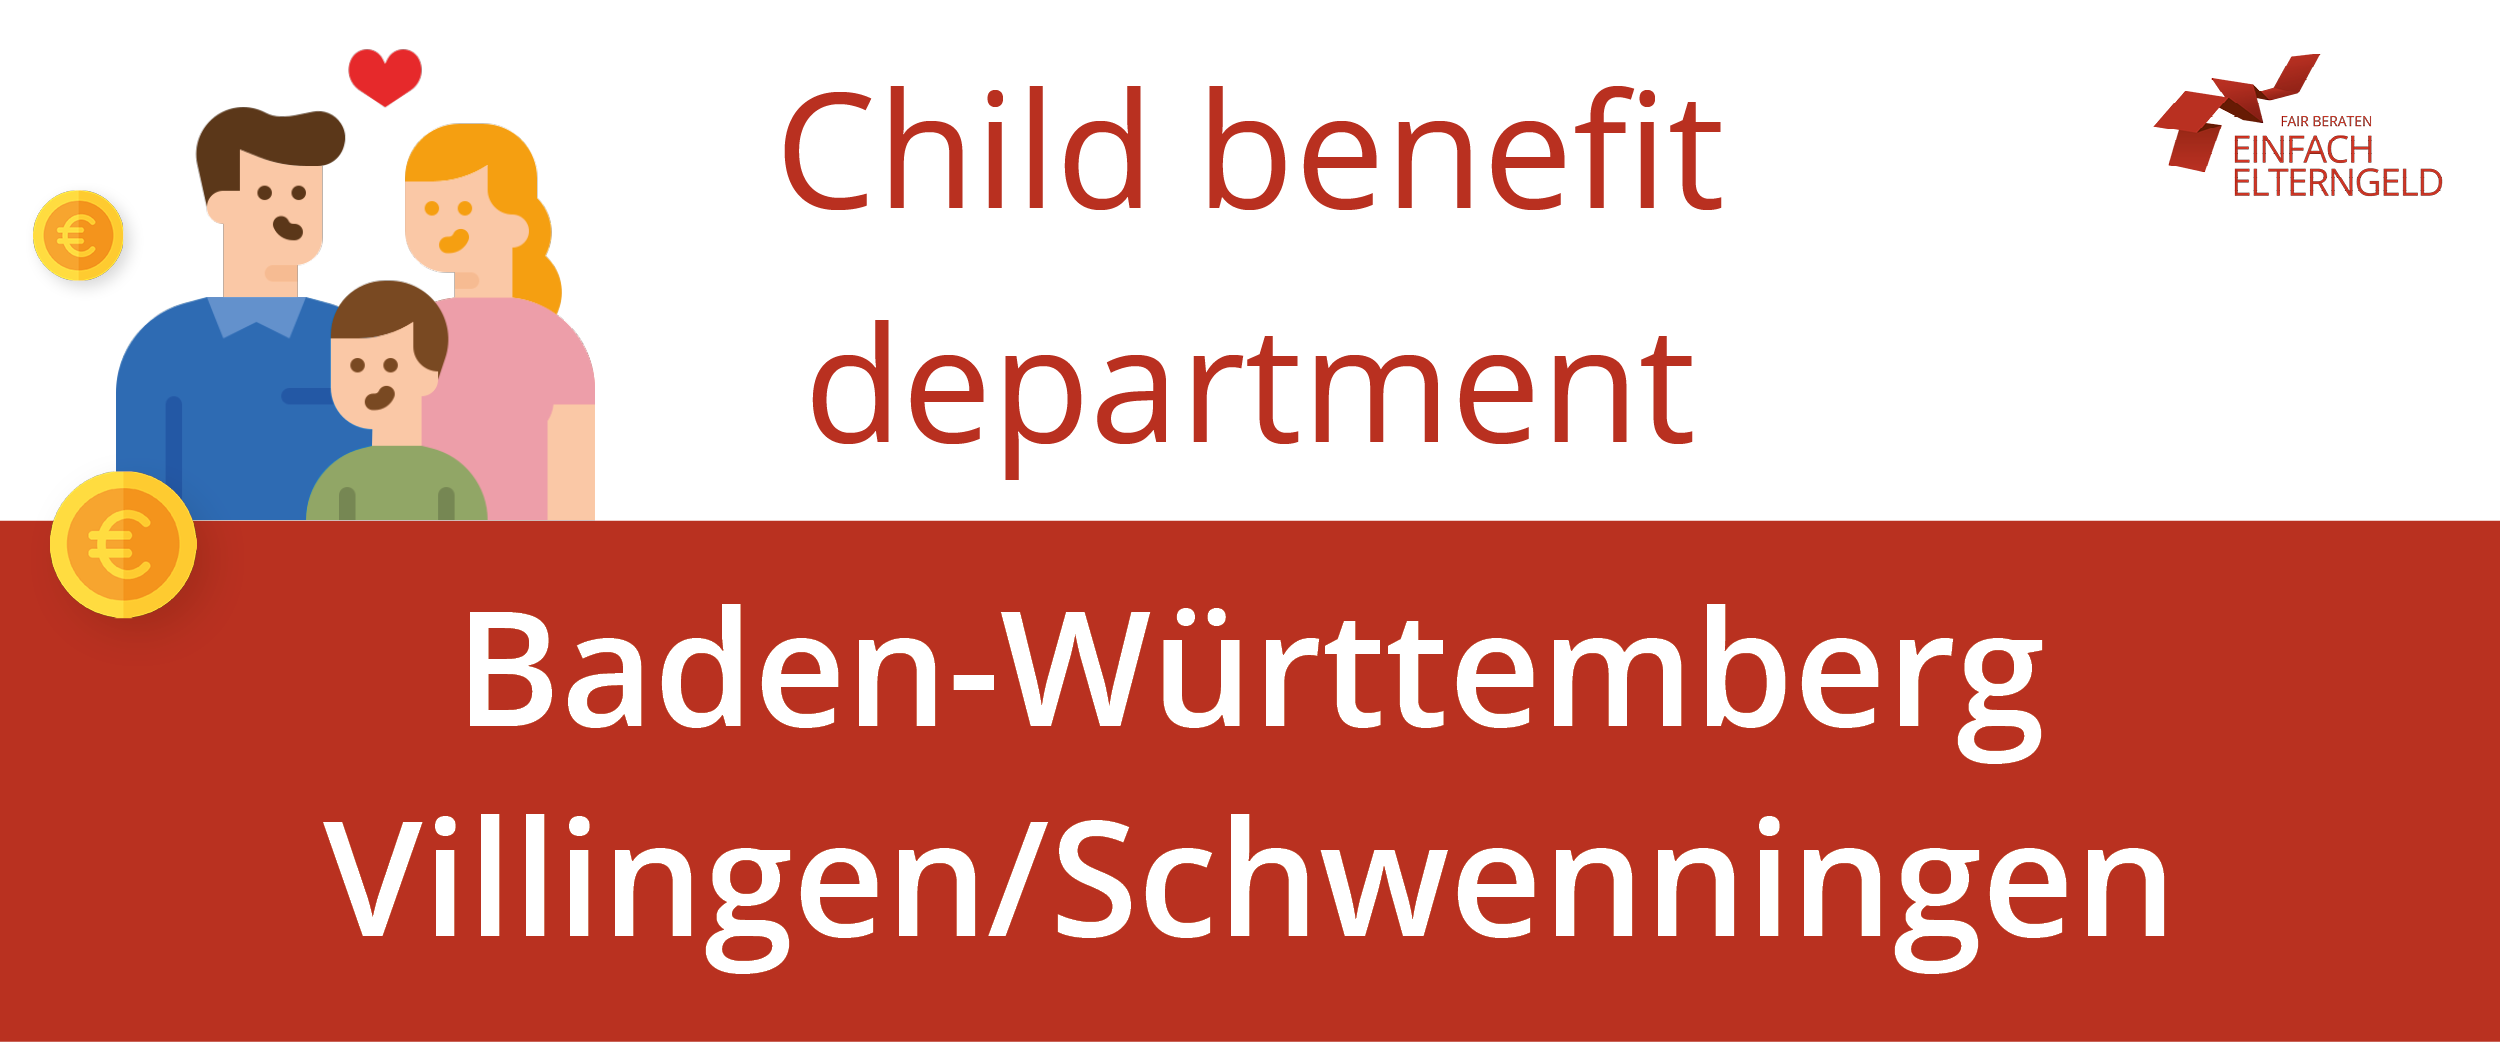 We present you the Child benefit department Baden-Württemberg Villingen-Schwenningen.